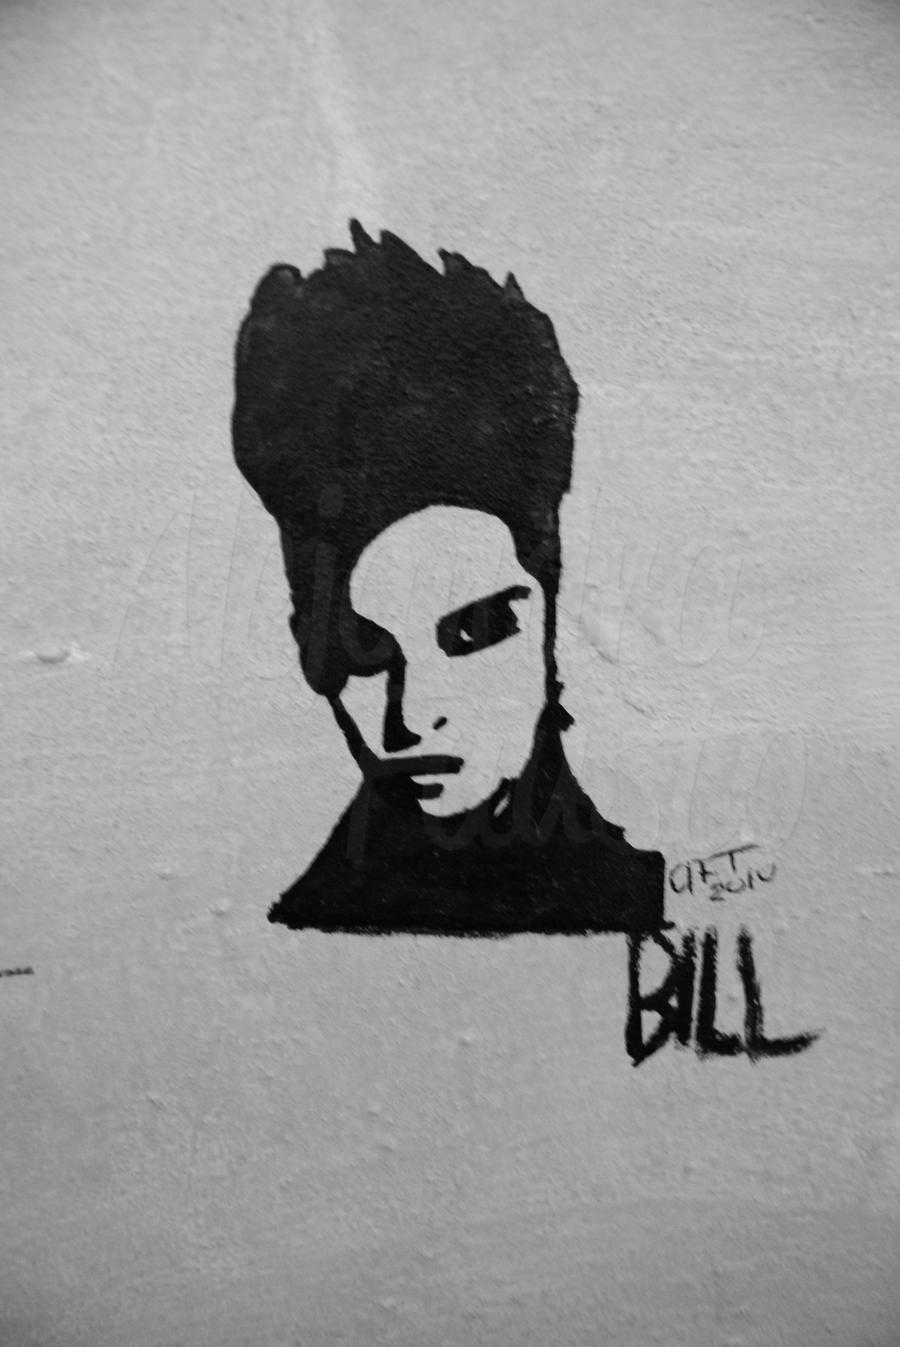 Bill in my wall